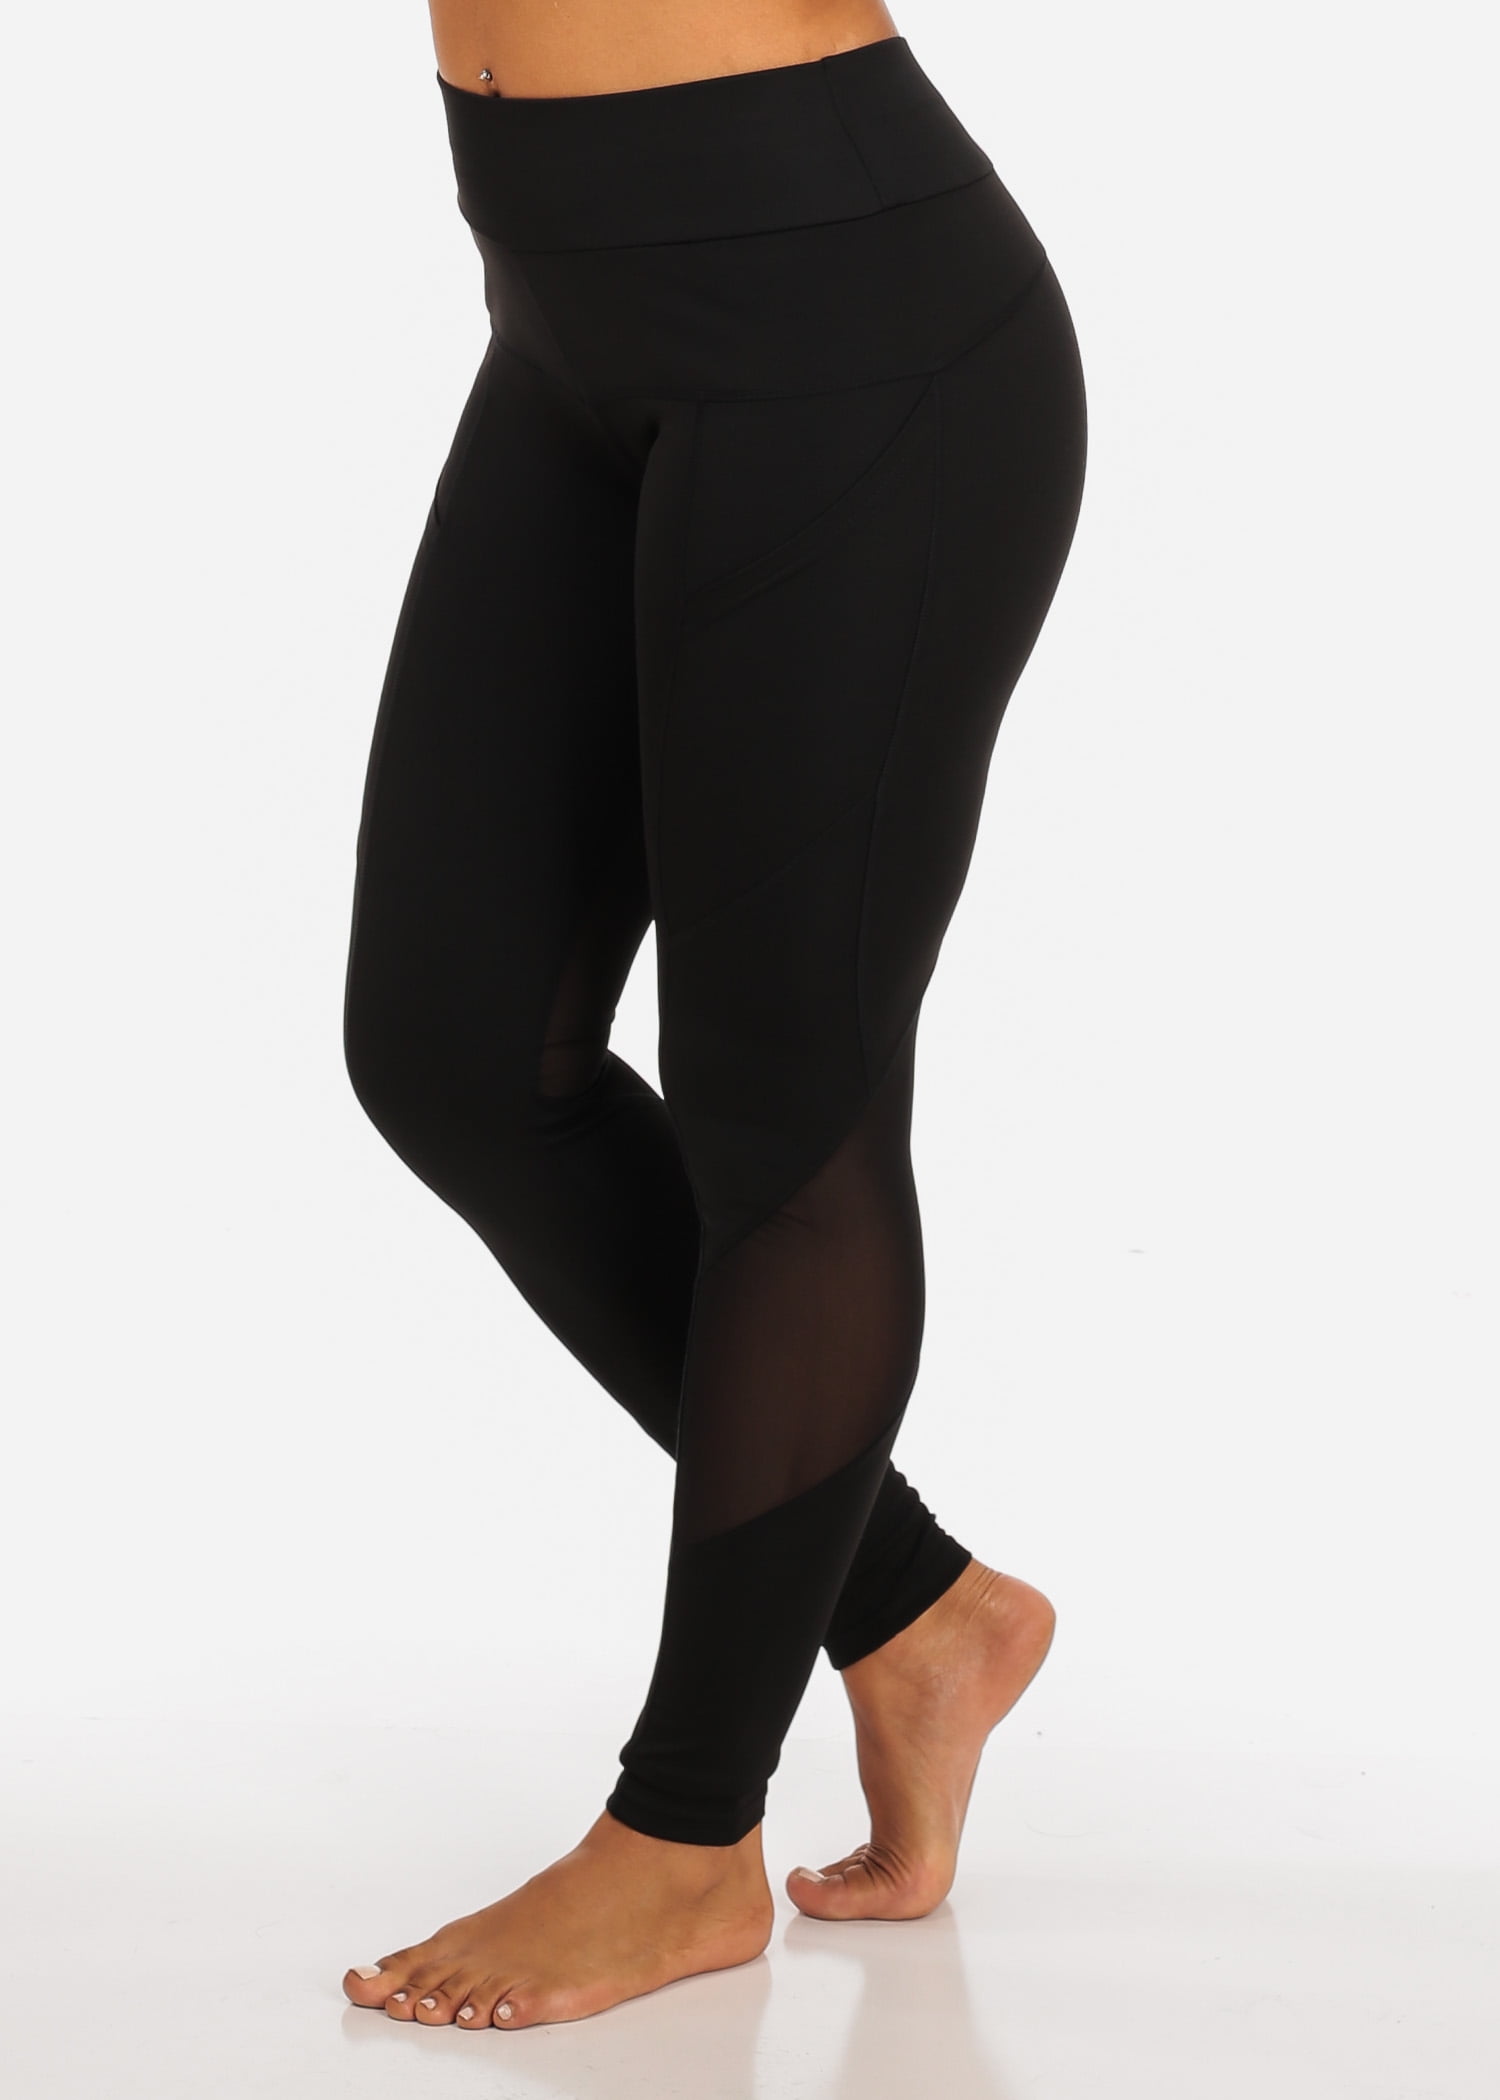 TSLA Women's Yoga Pants with Hidden/Side Pocket, Lightweight Workout  Running Tights, Capri 4-Way Stretch Leggings